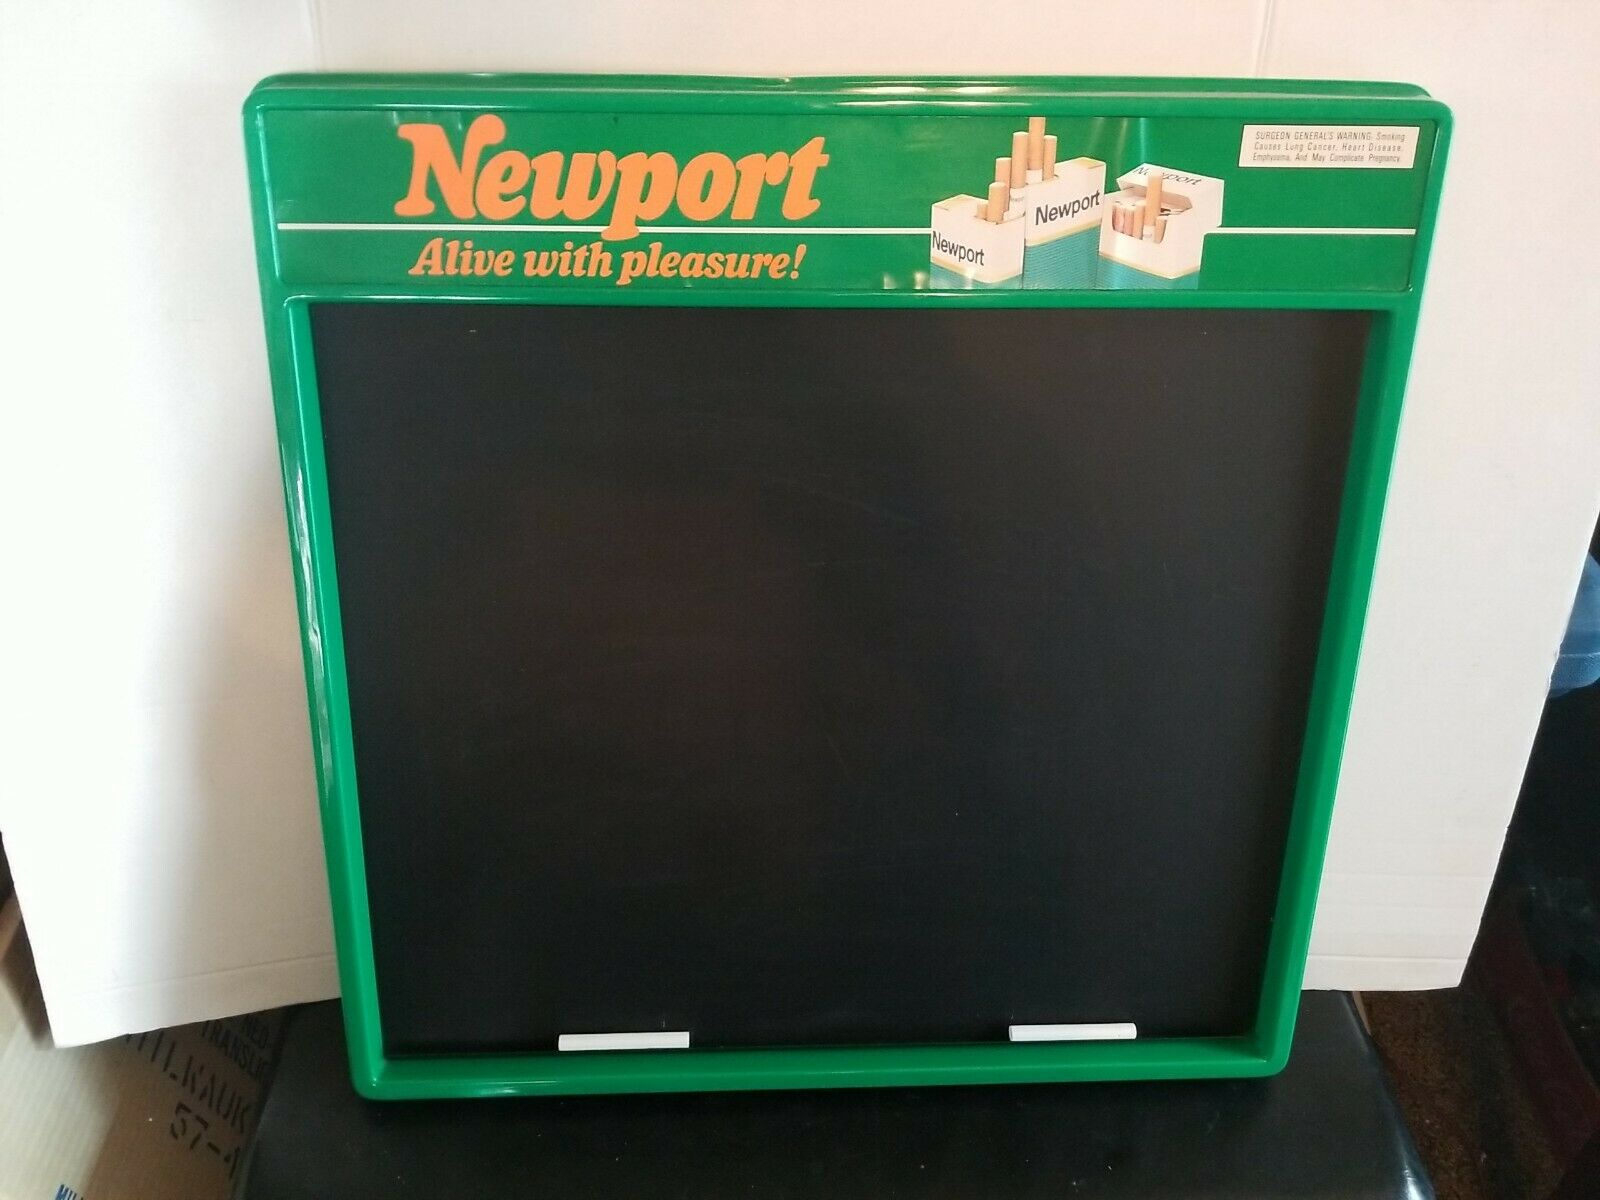 Newport Cigarettes Smoking Store Advertising Chalkboard Bar Sign Rare